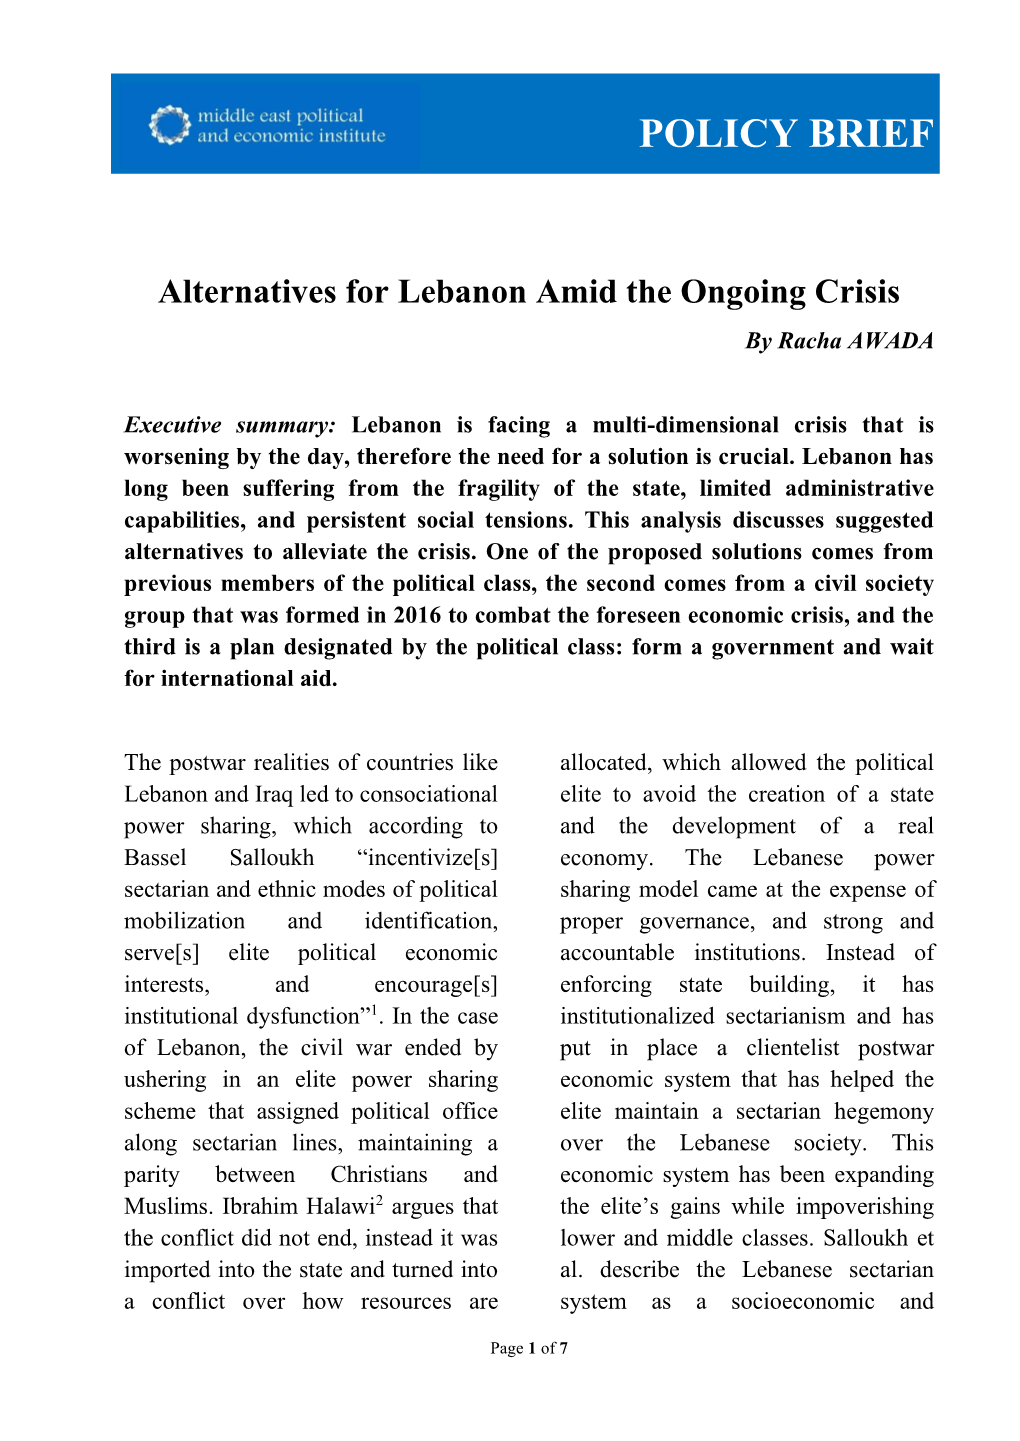 Alternatives for Lebanon Amid the Ongoing Crisis by Racha AWADA